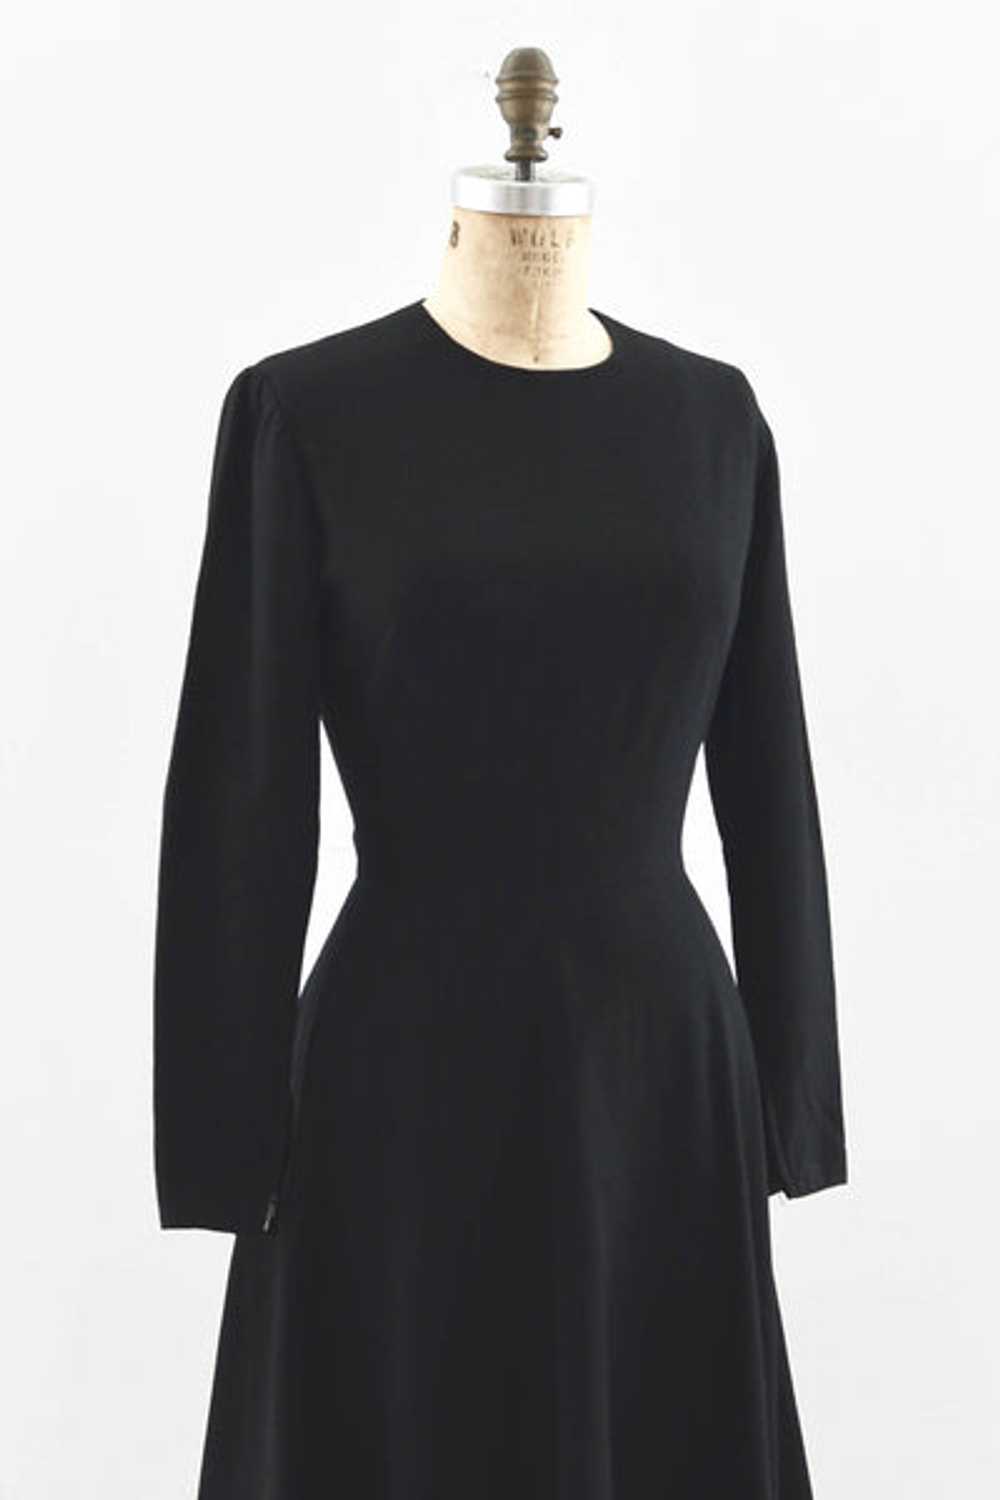 Neiman Marcus Wool Dress - image 2